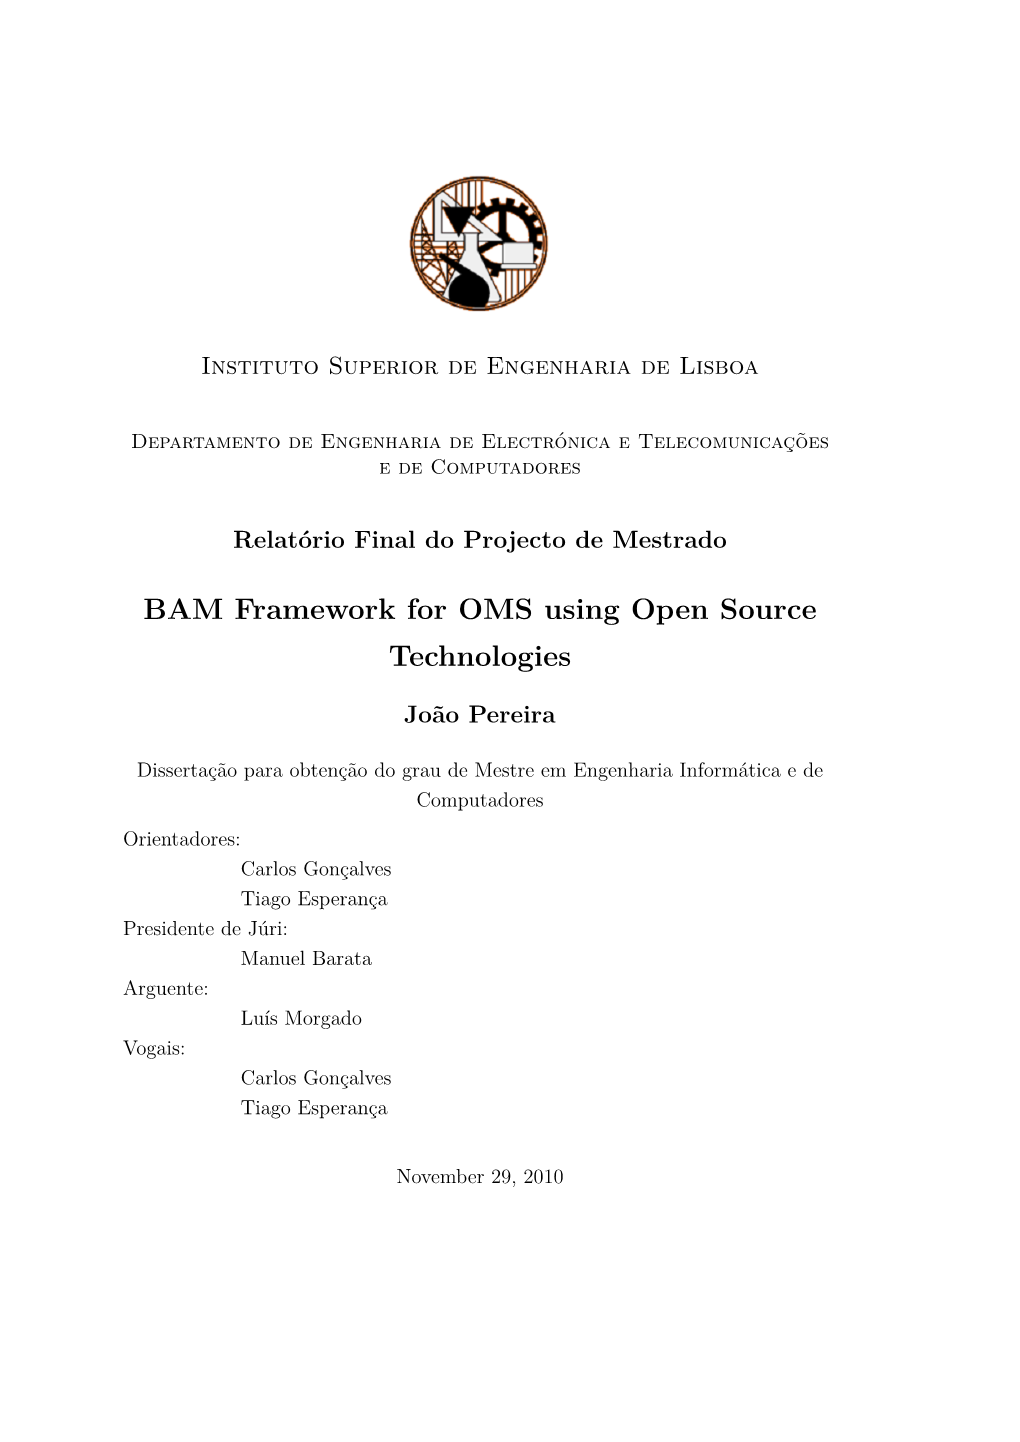 BAM Framework for OMS Using Open Source Technologies